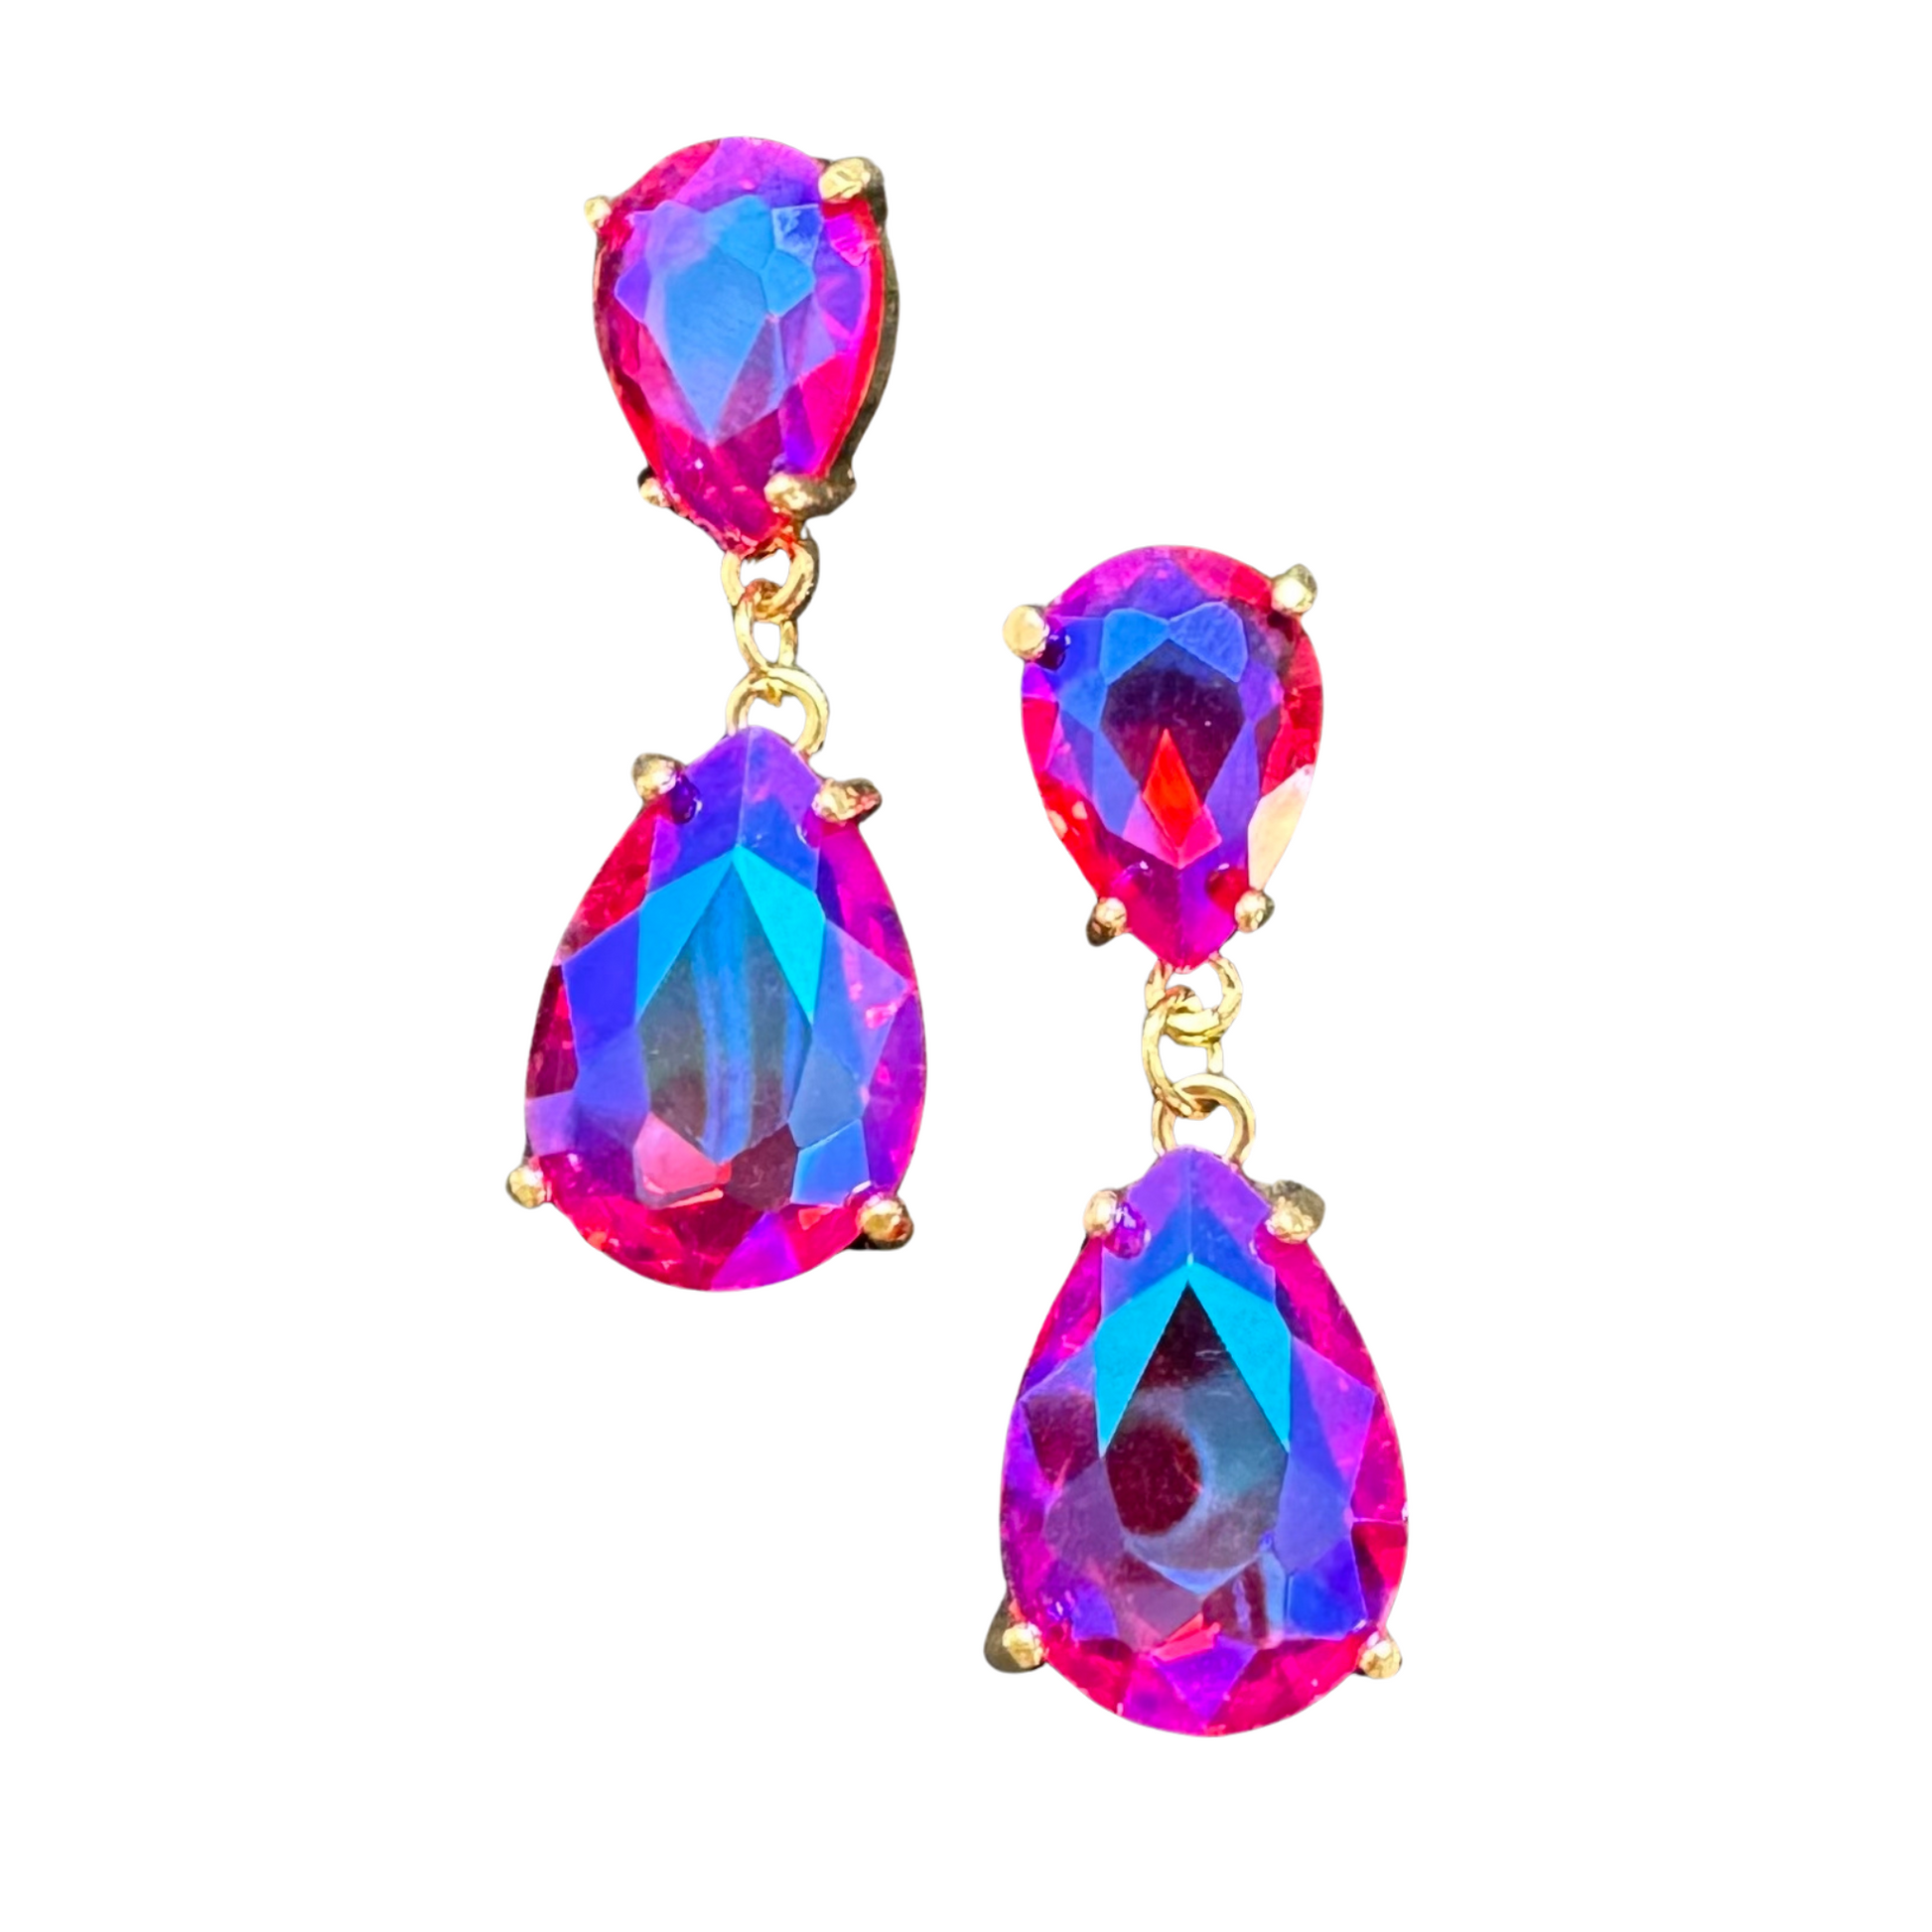 Colored Iridescent Dangle earrings in fuchsia 